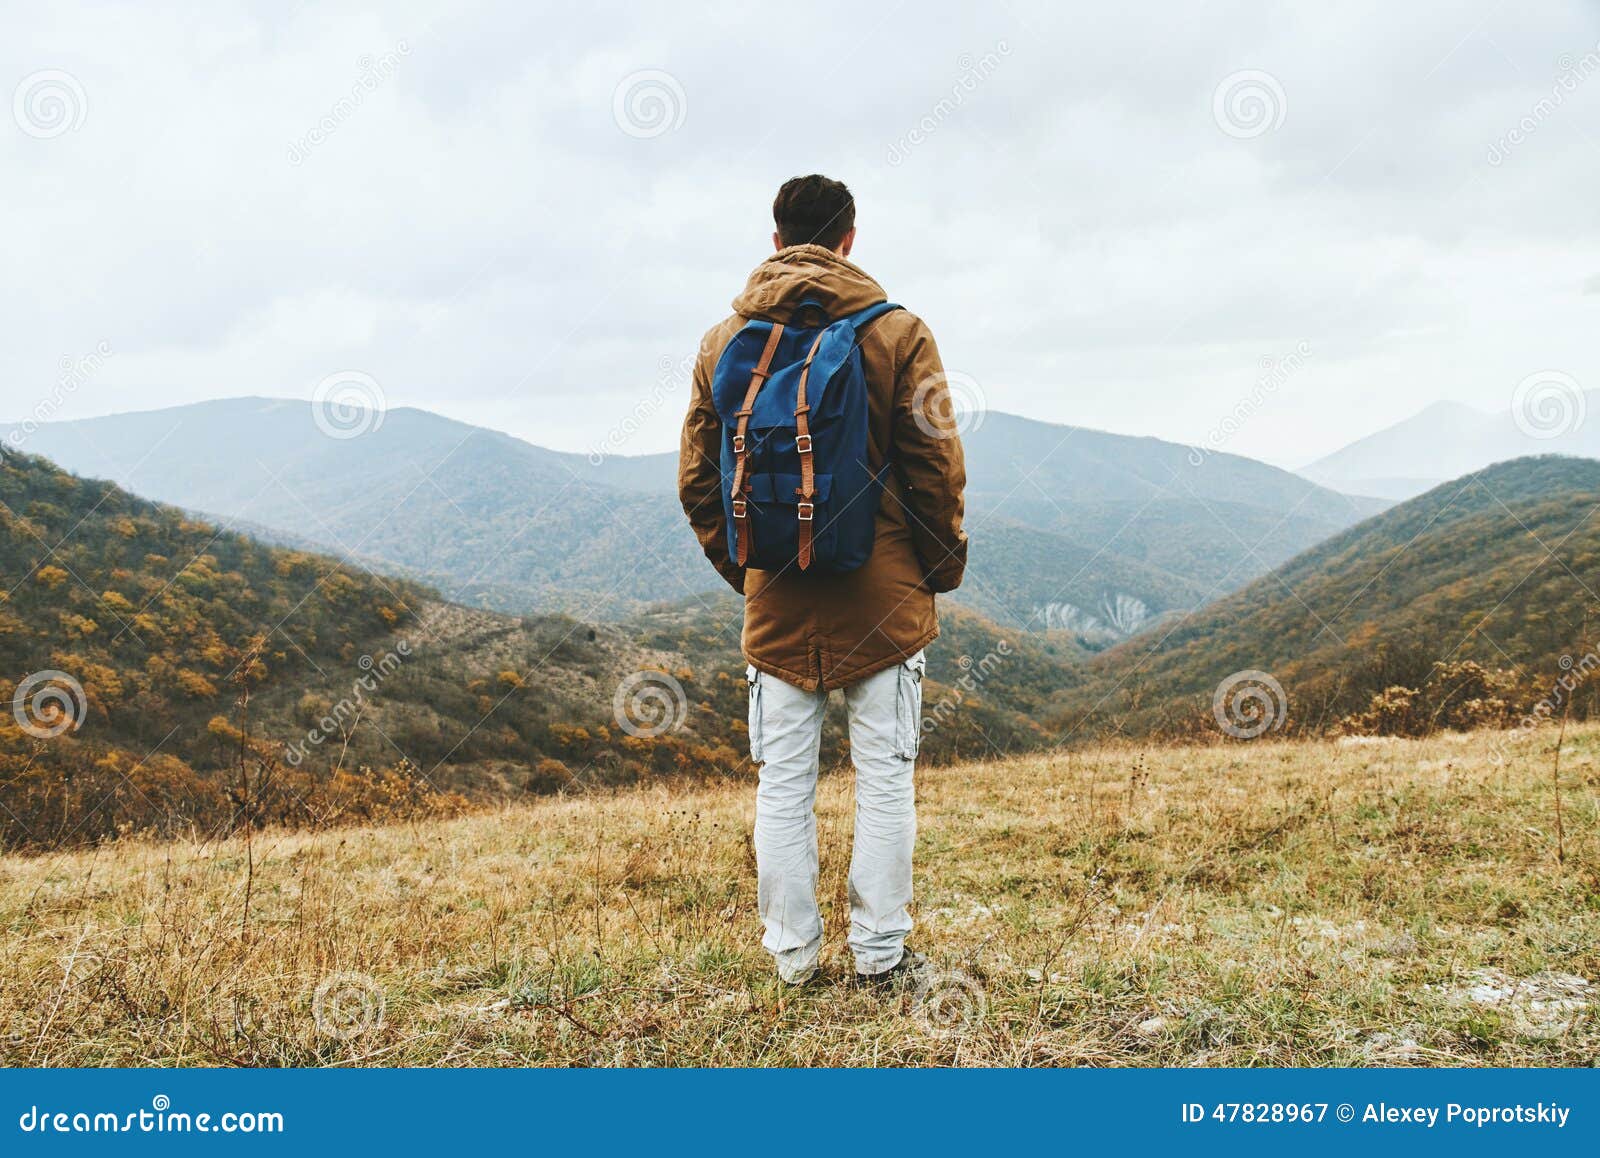 hiker man enjoying by scenics in autumn season